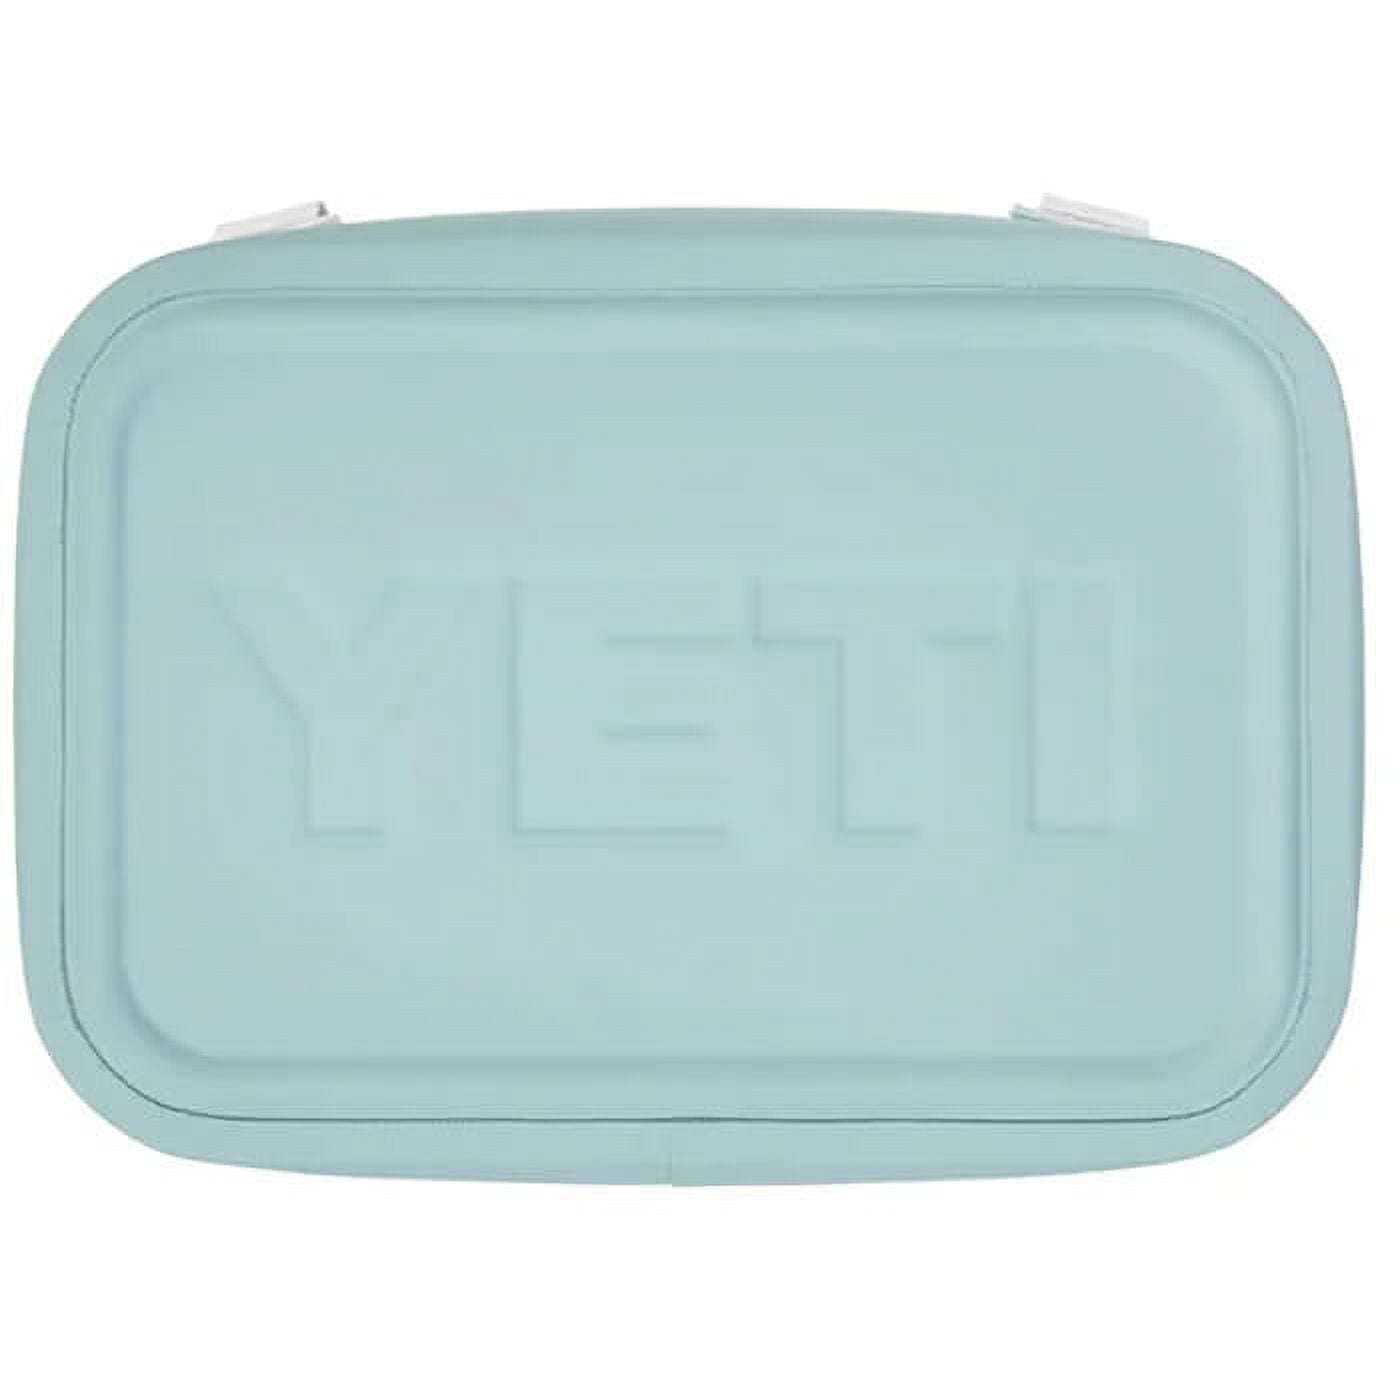 YETI Hopper Flip 12 Insulated Personal Cooler, Aquifer Blue in the